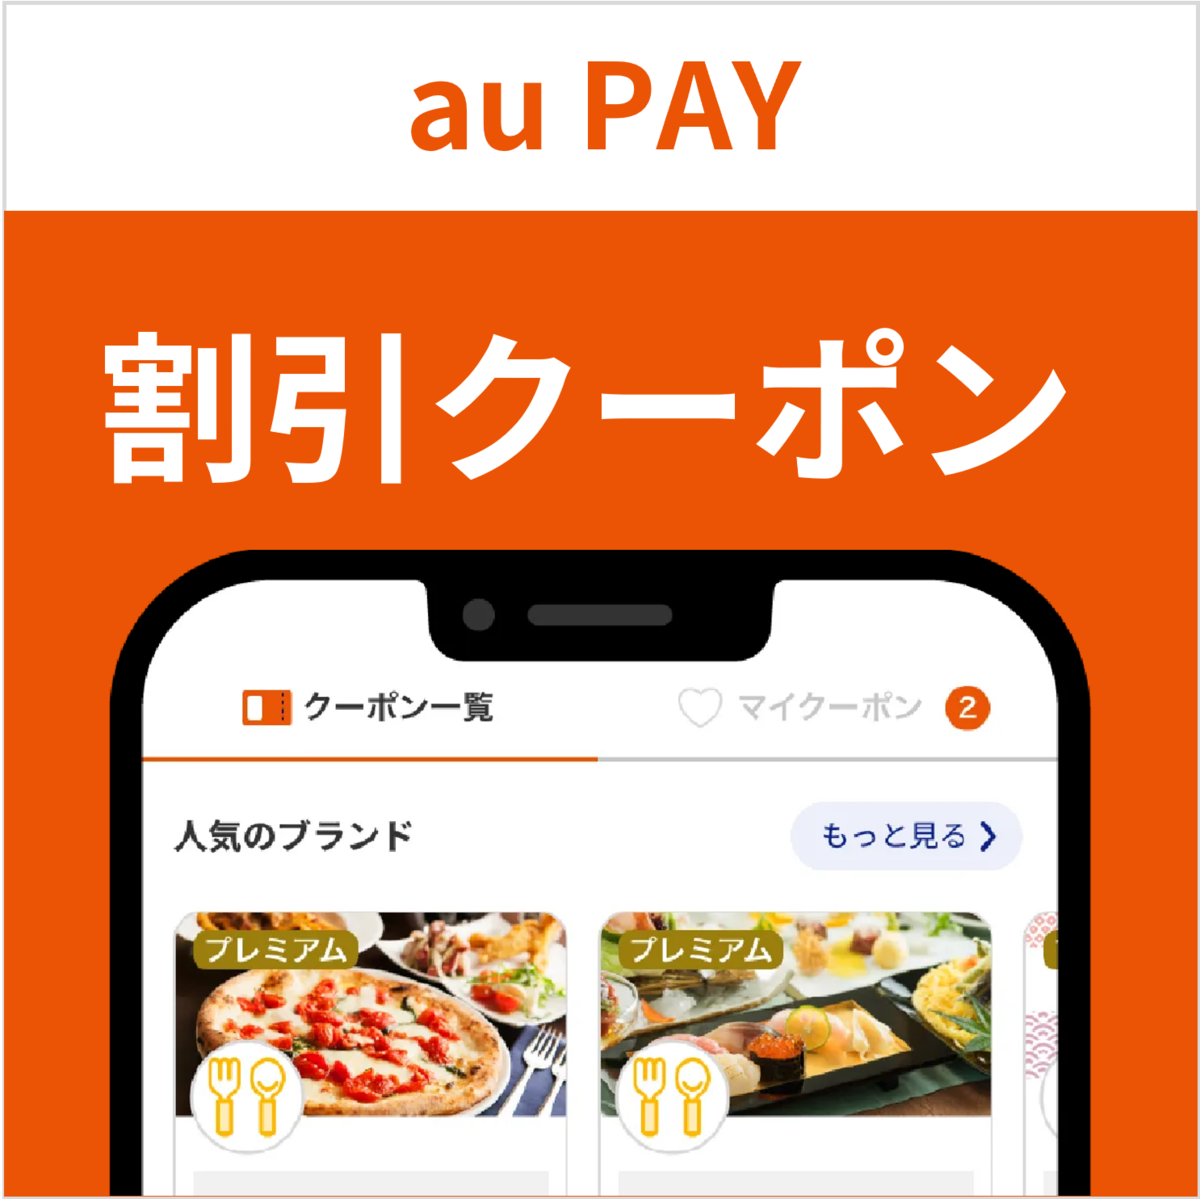 au PAY、オリジン弁当・キッチンオリジンの対象店舗で使える50円割引